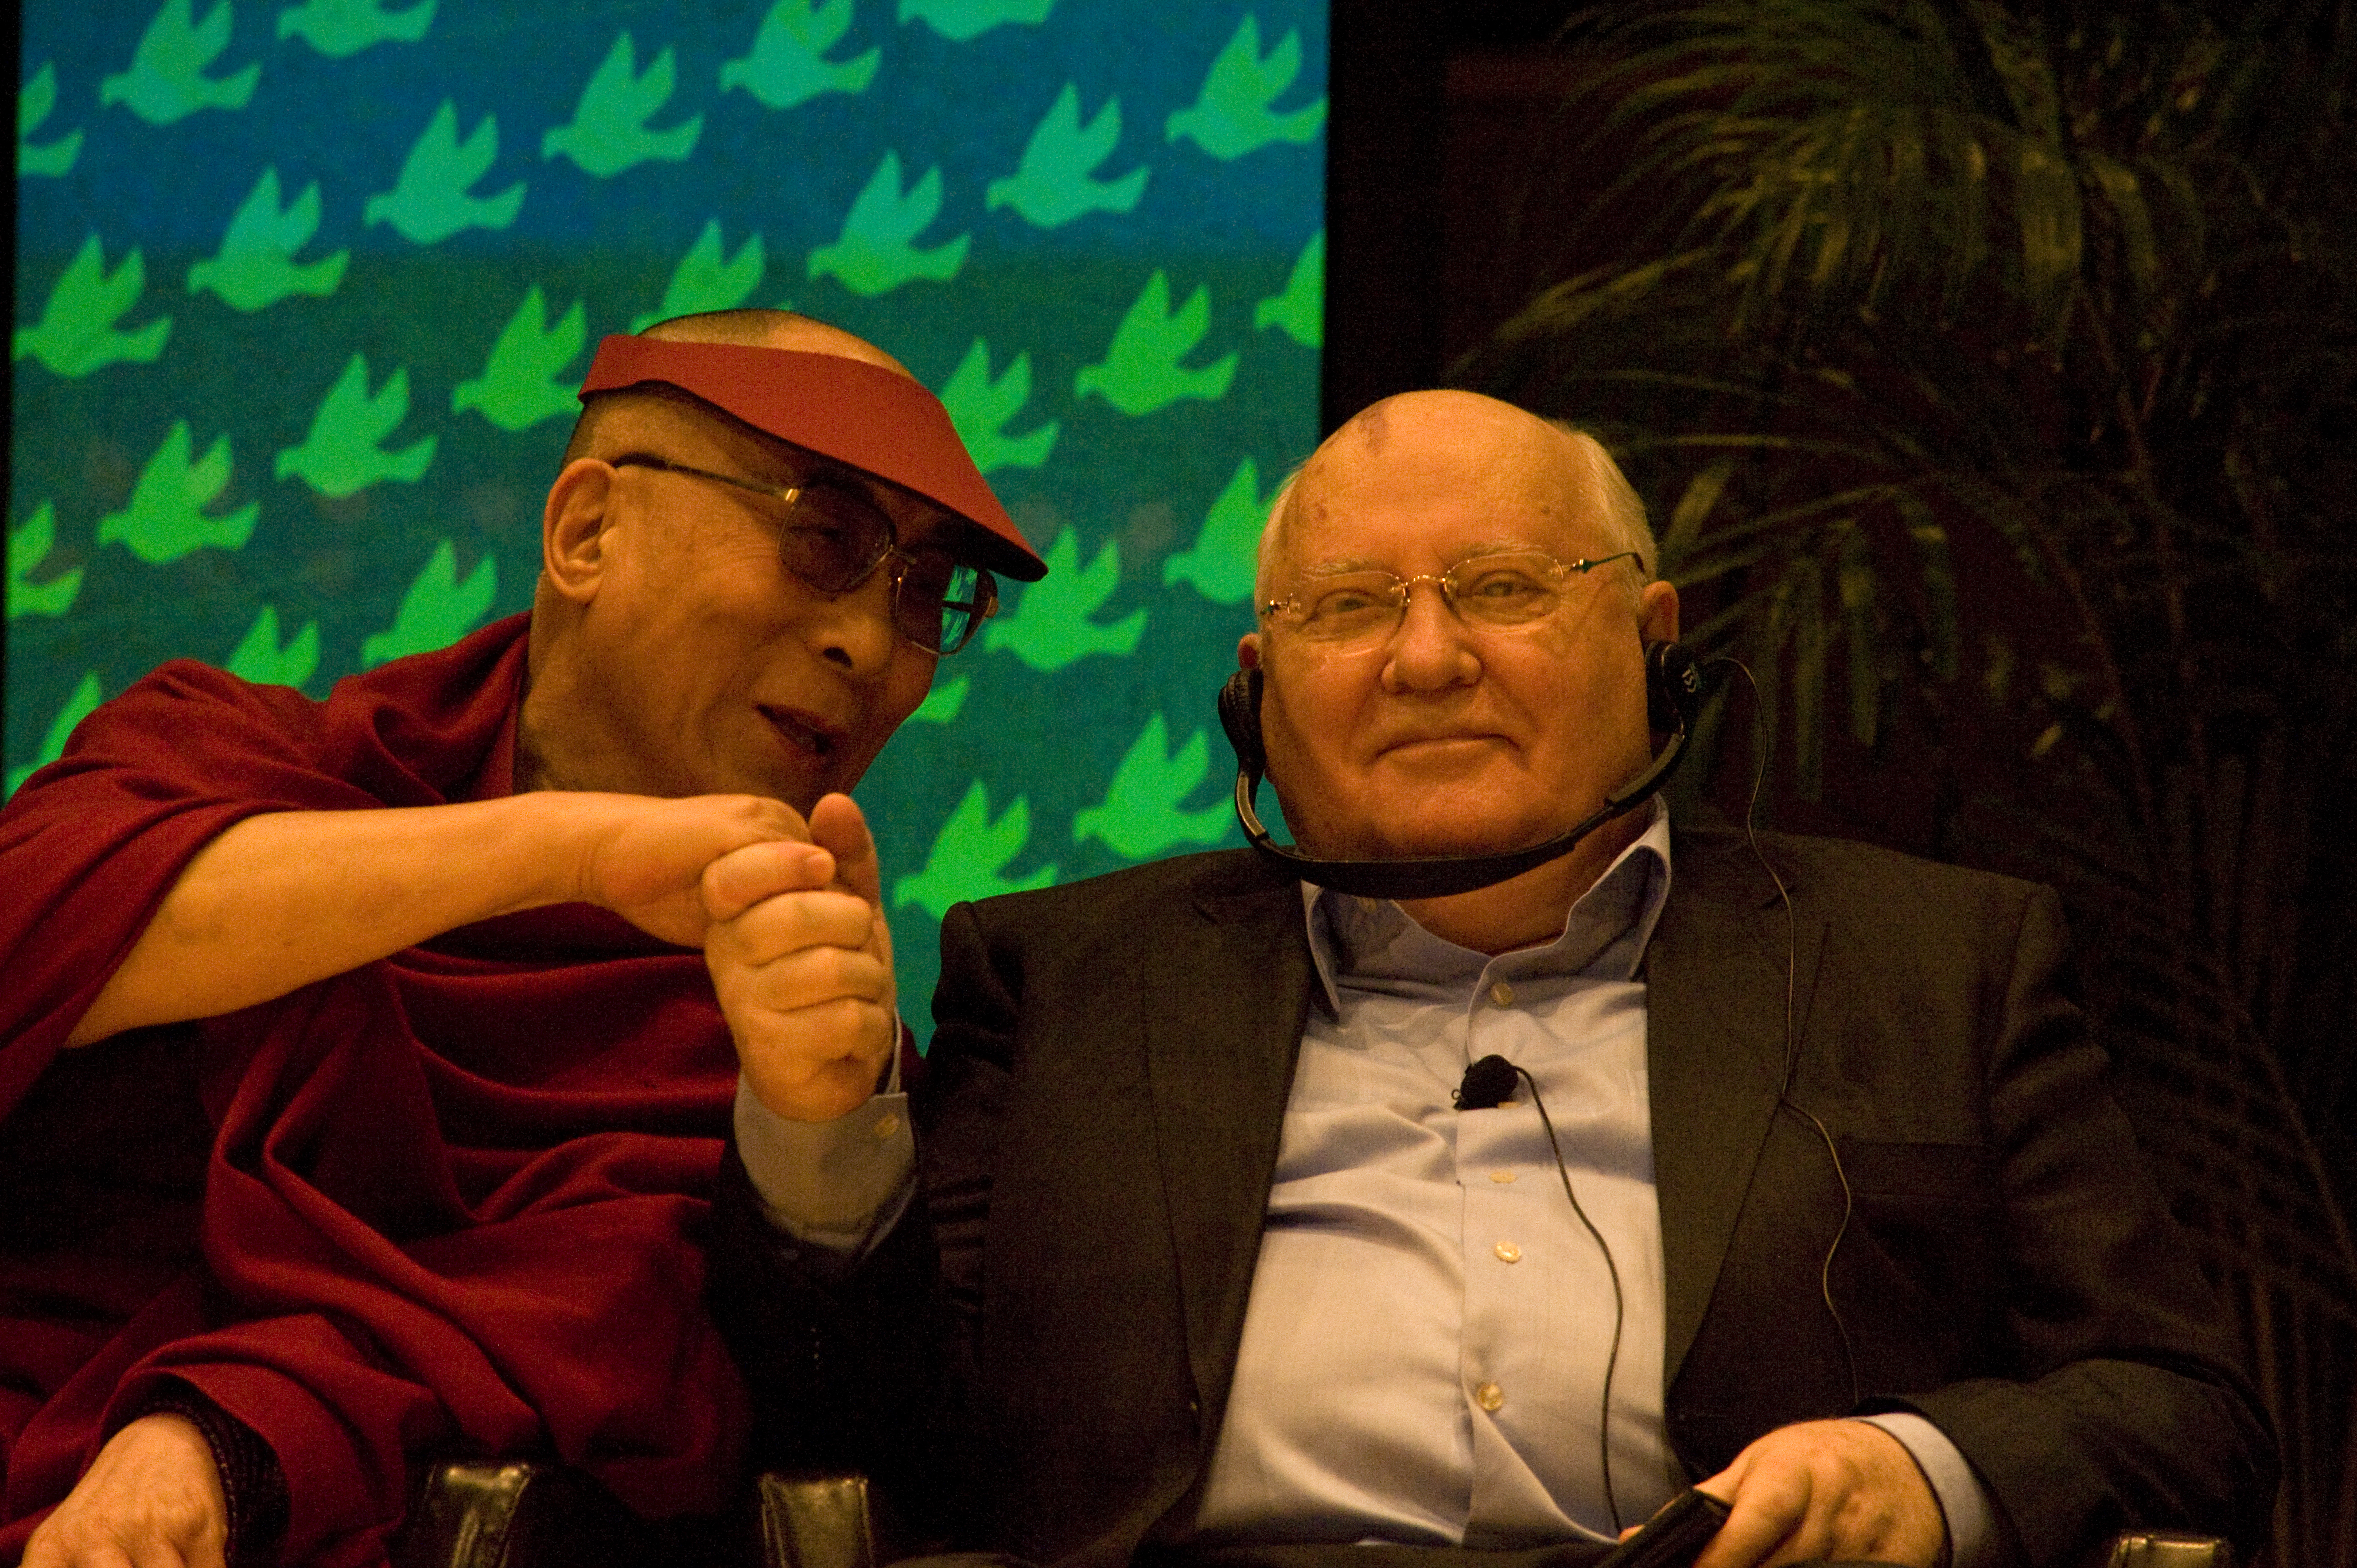 Далай-лама назвал Горбачёва образцовым государственным деятелем